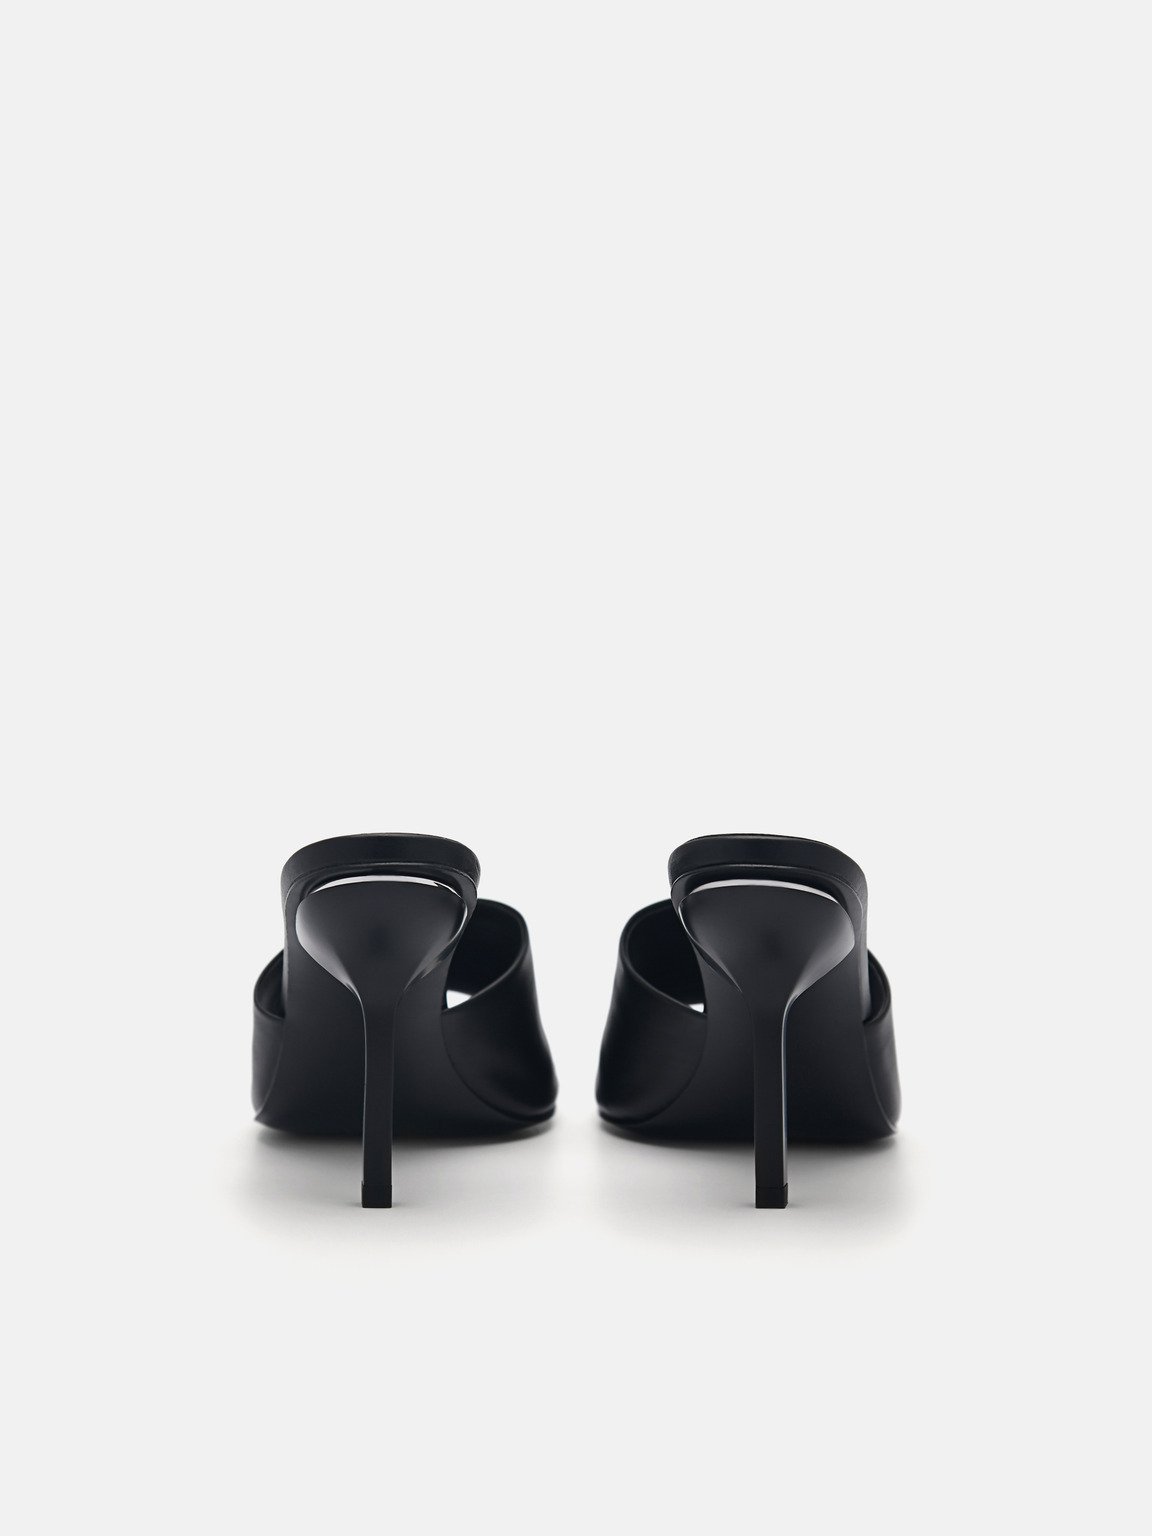 Maria Leather Heel Sandals, Black